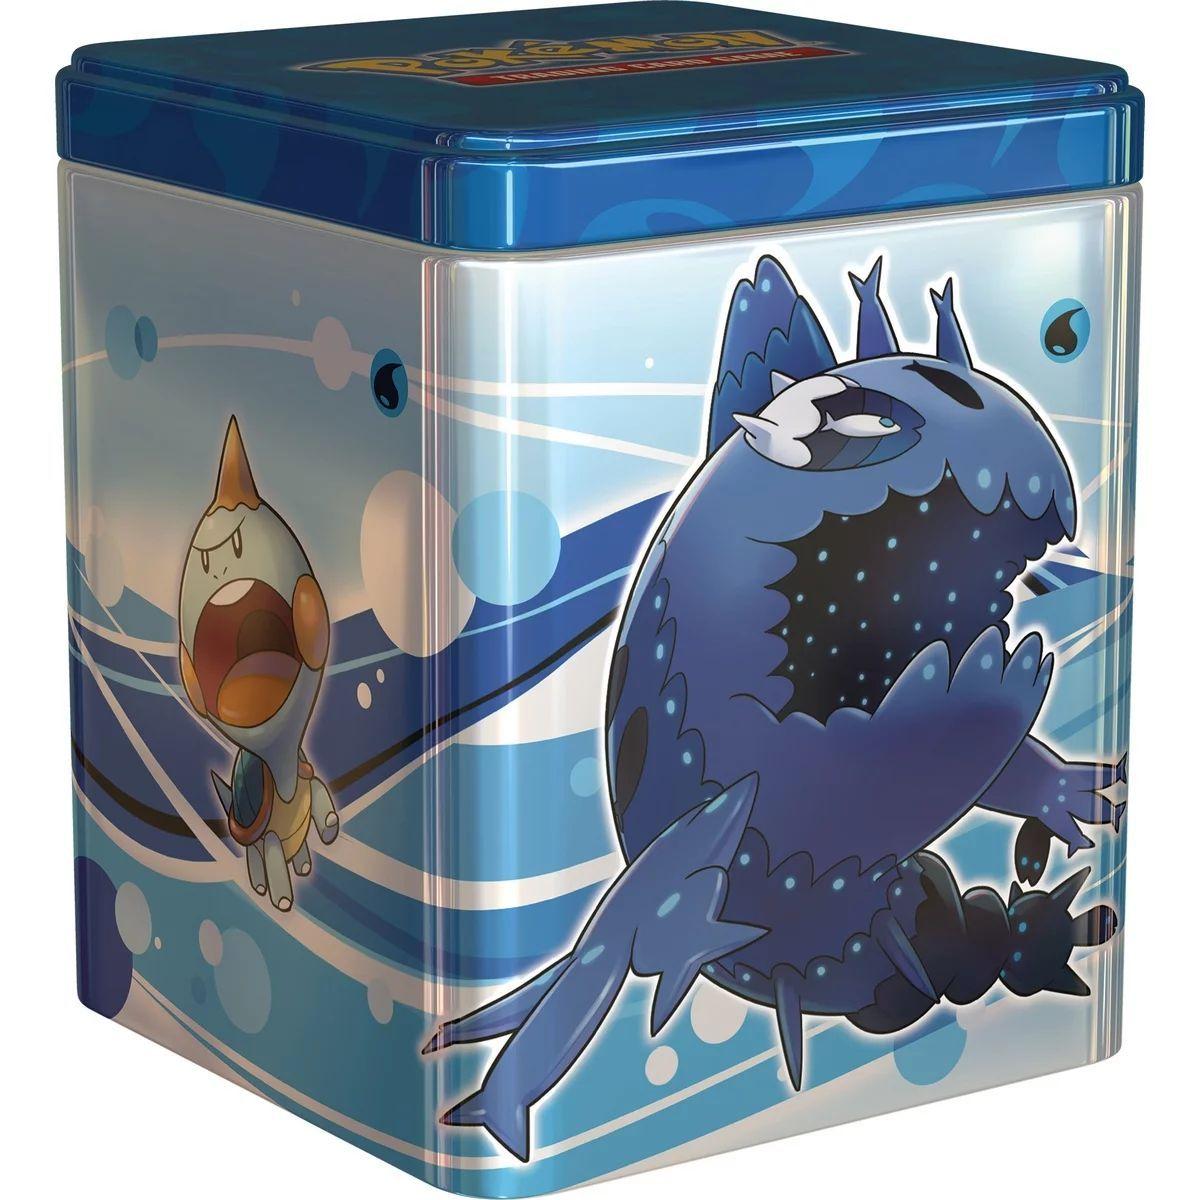 ASMODEE Boîte métal avec jeu de cartes Pokémon pas cher 